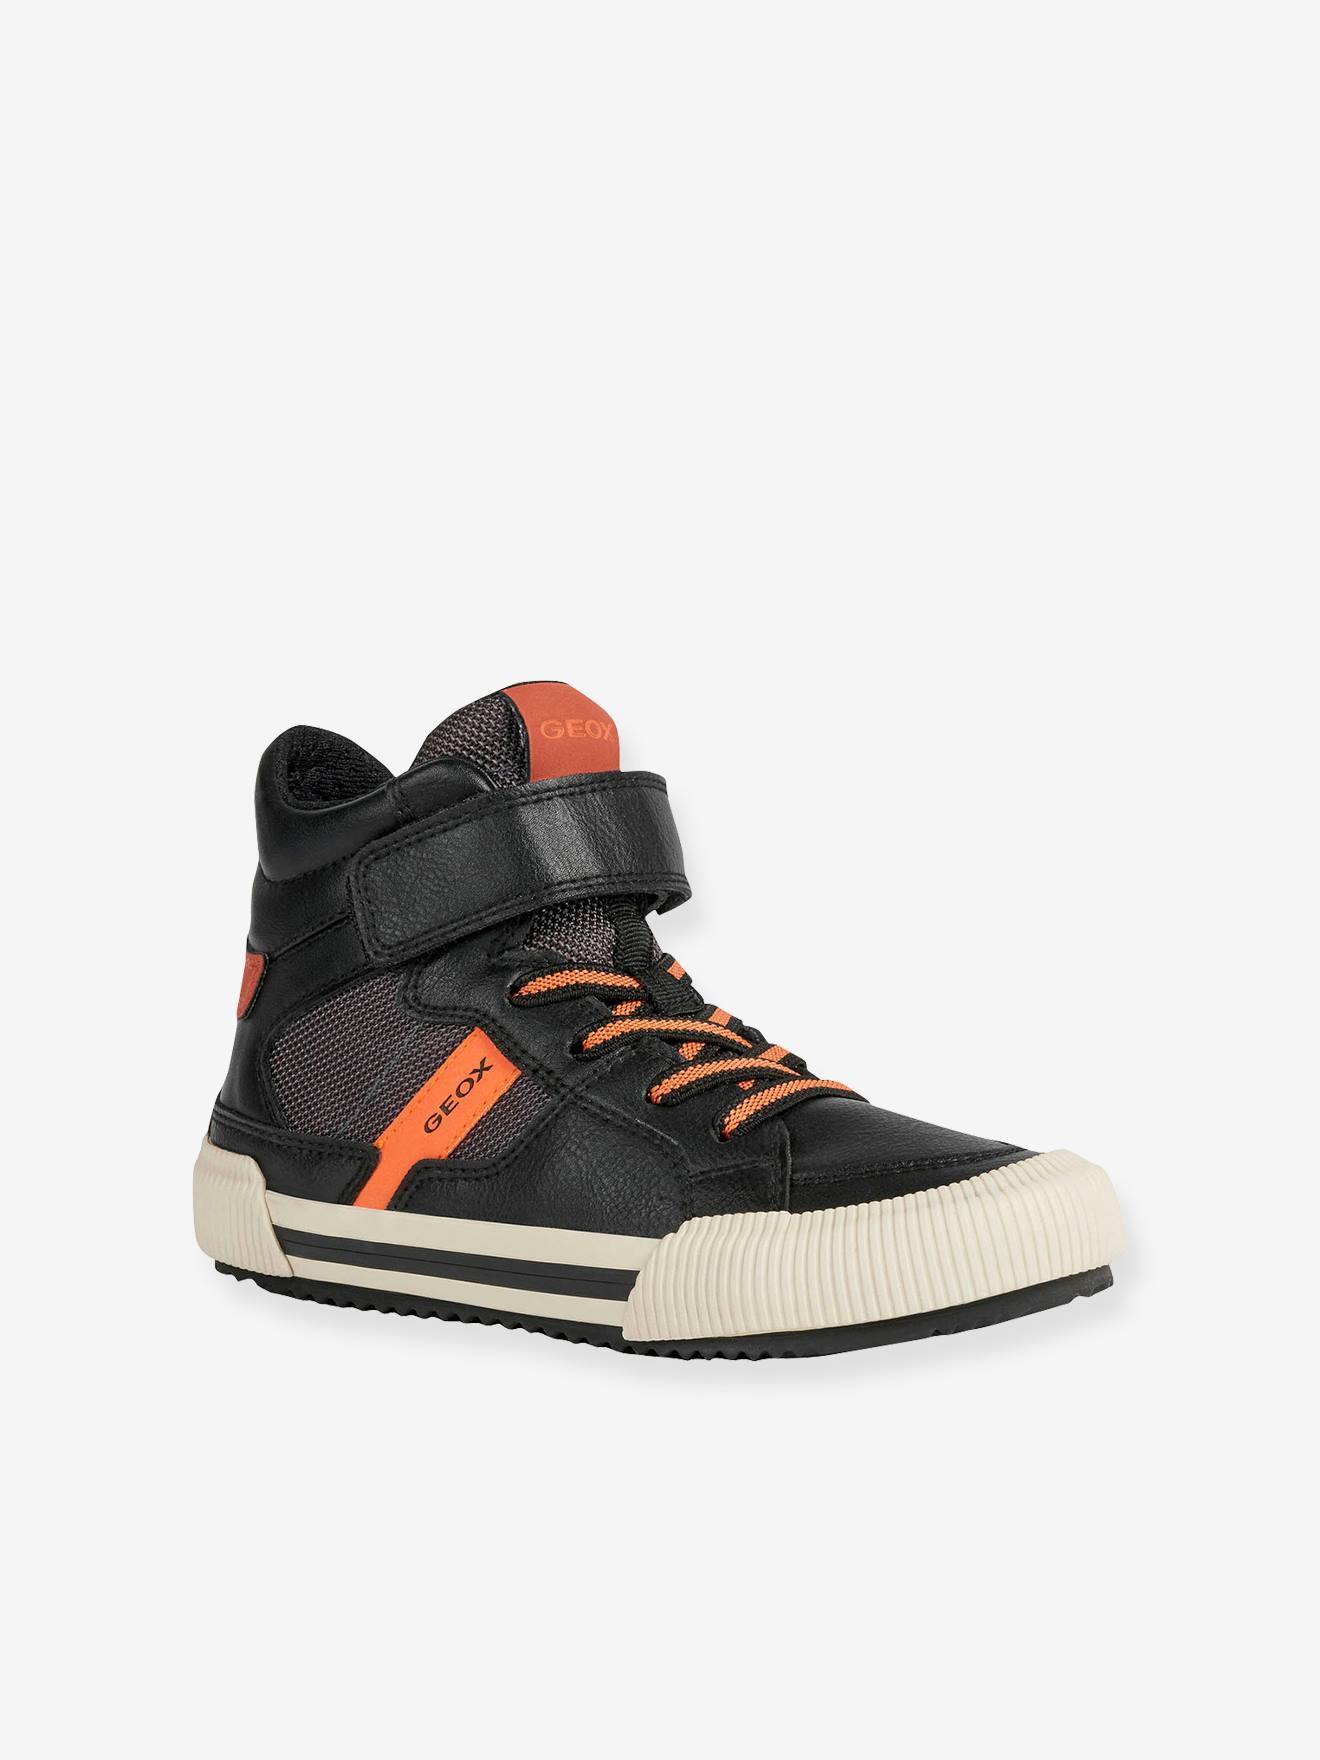 Halfhoge sneakers voor jongens J Alonisso Boy B-GBK GEOX® zwart oranje